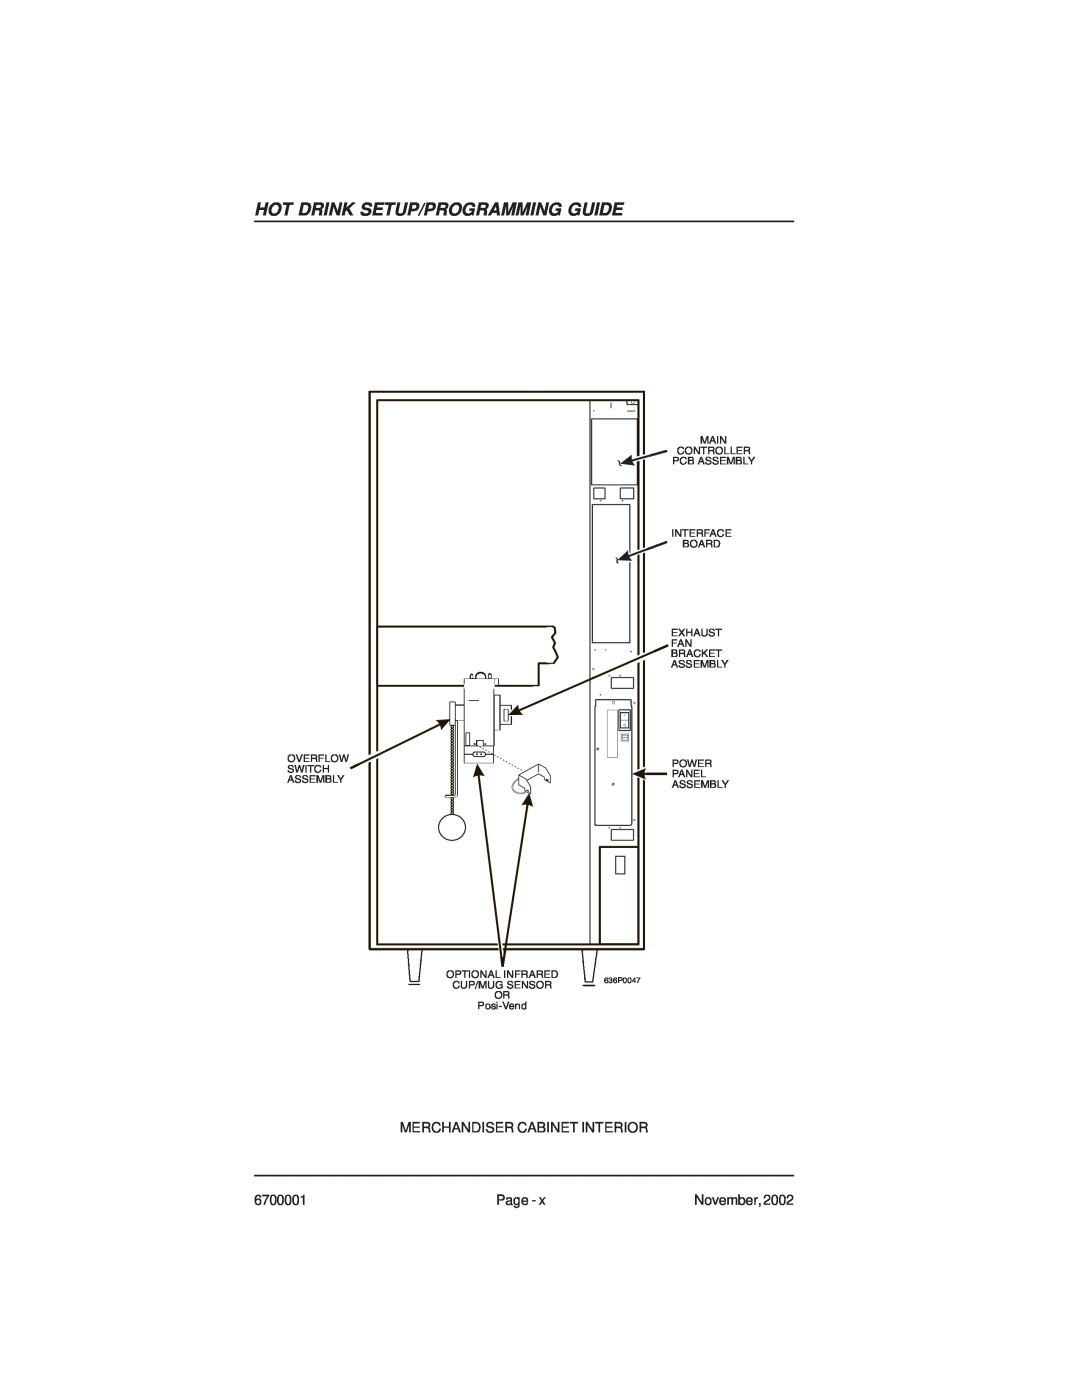 Crane Merchandising Systems 670, 678 manual Hot Drink Setup/Programming Guide 